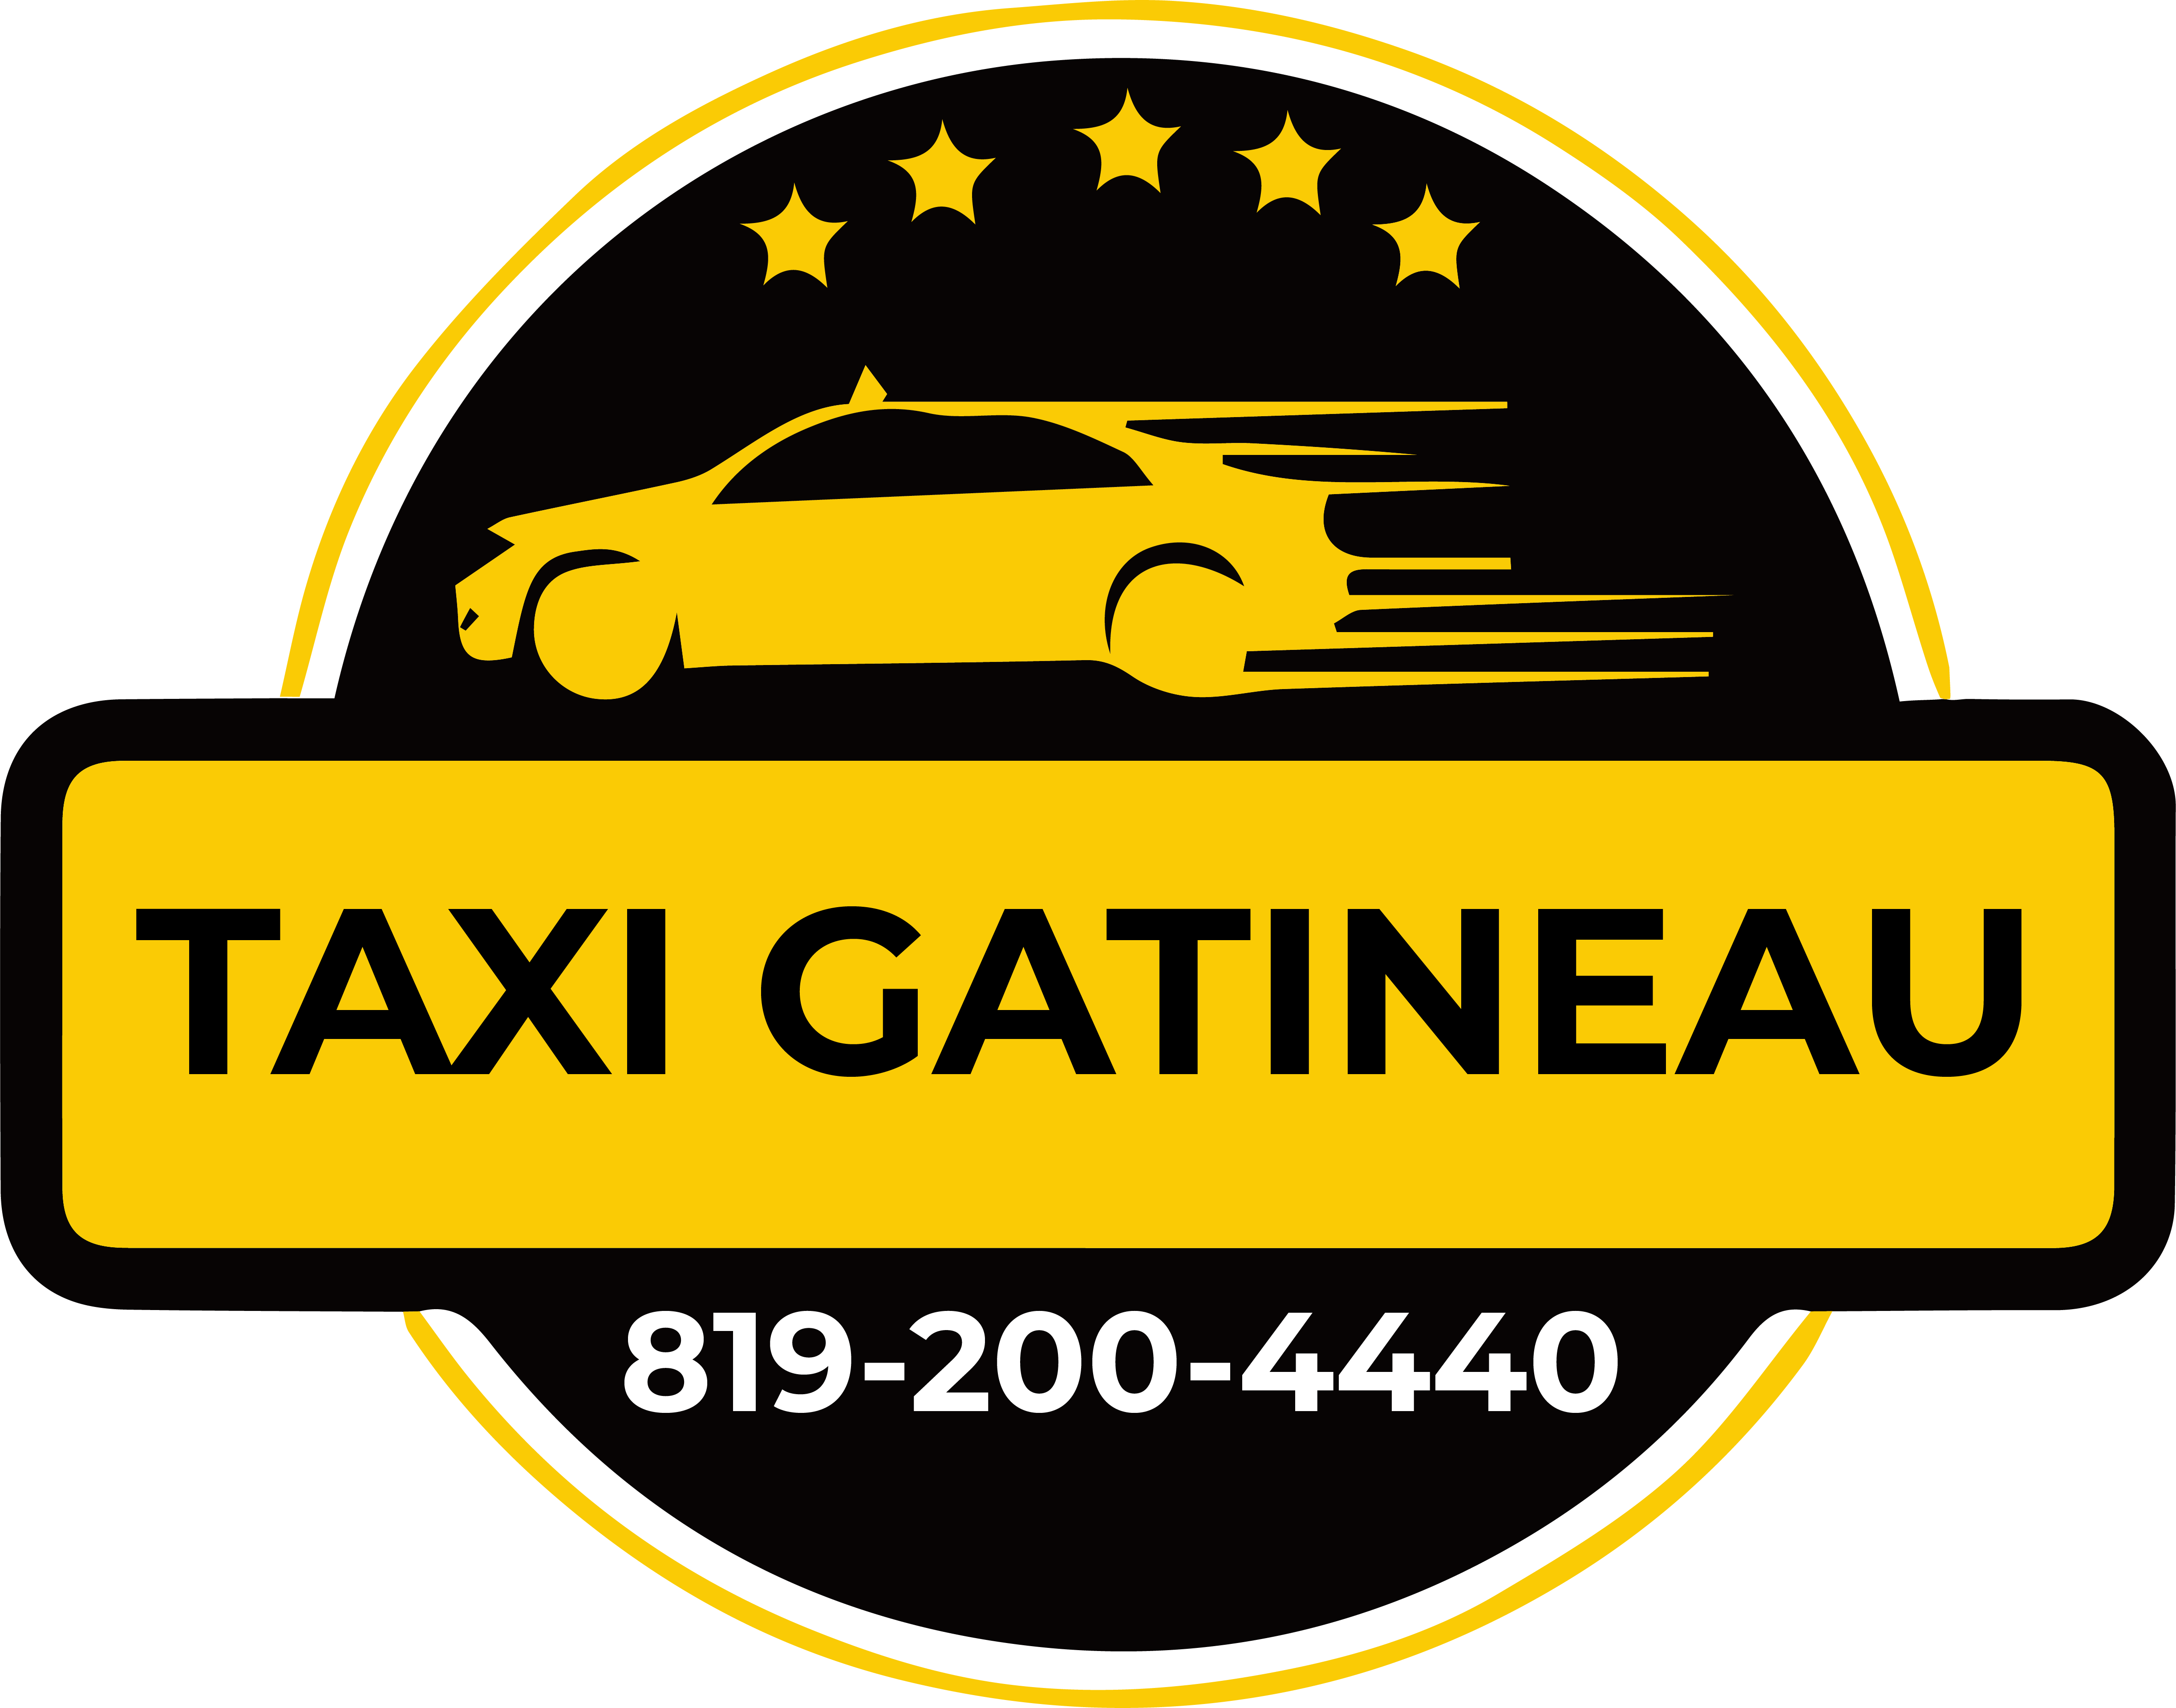 Taxi Gatineau